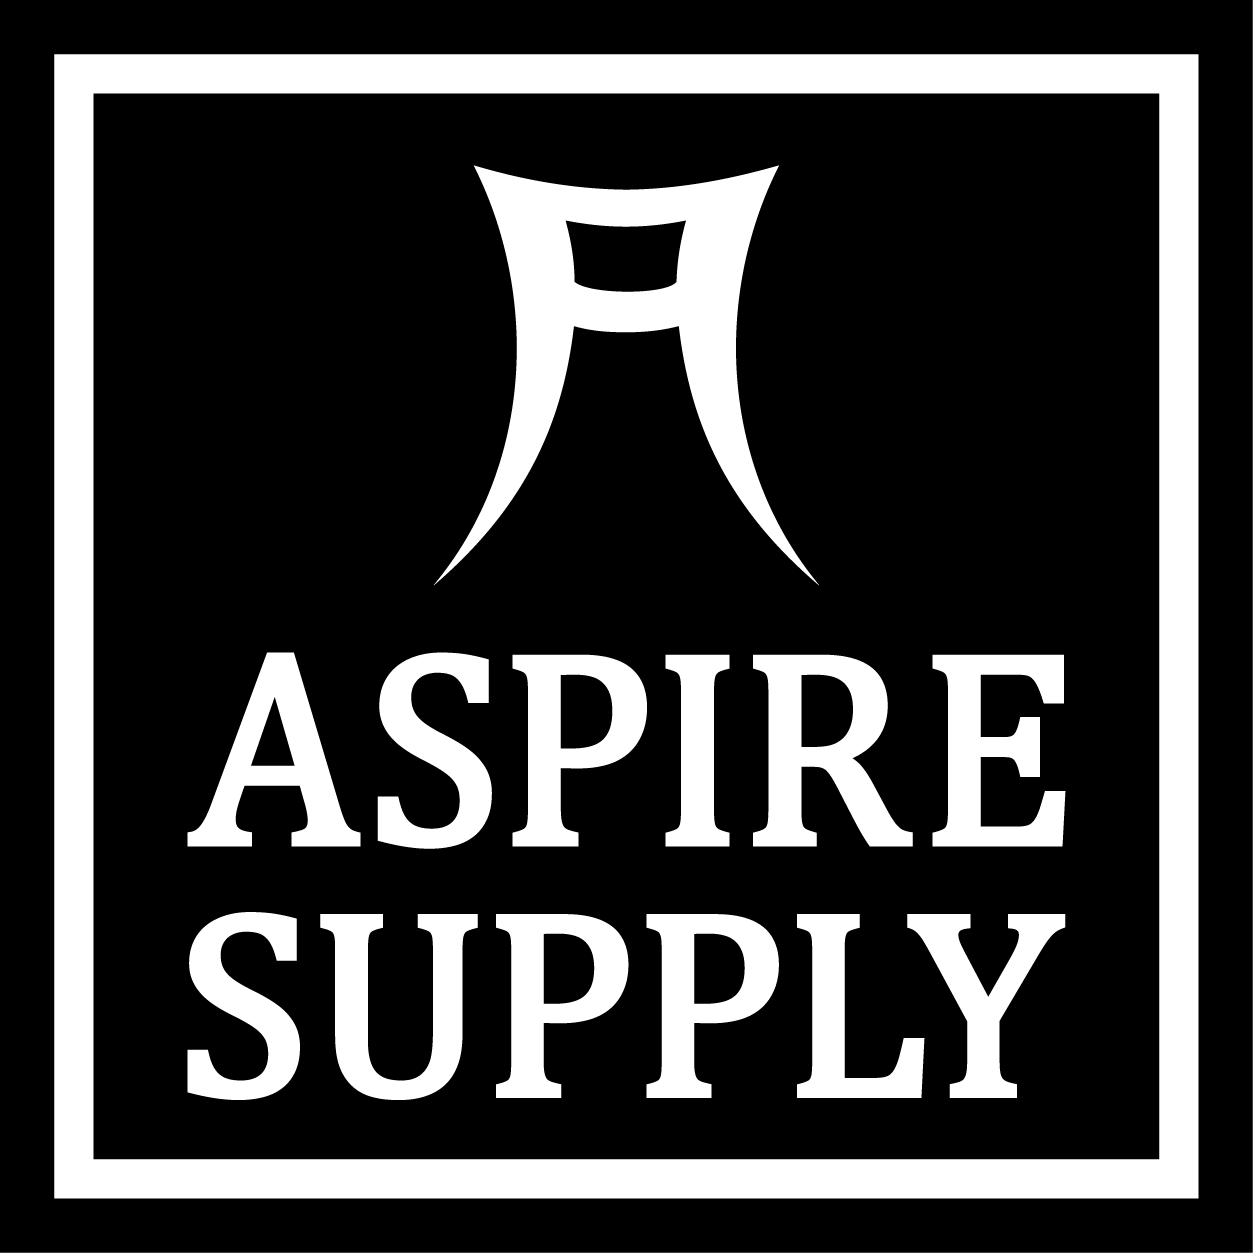 Aspire Supply